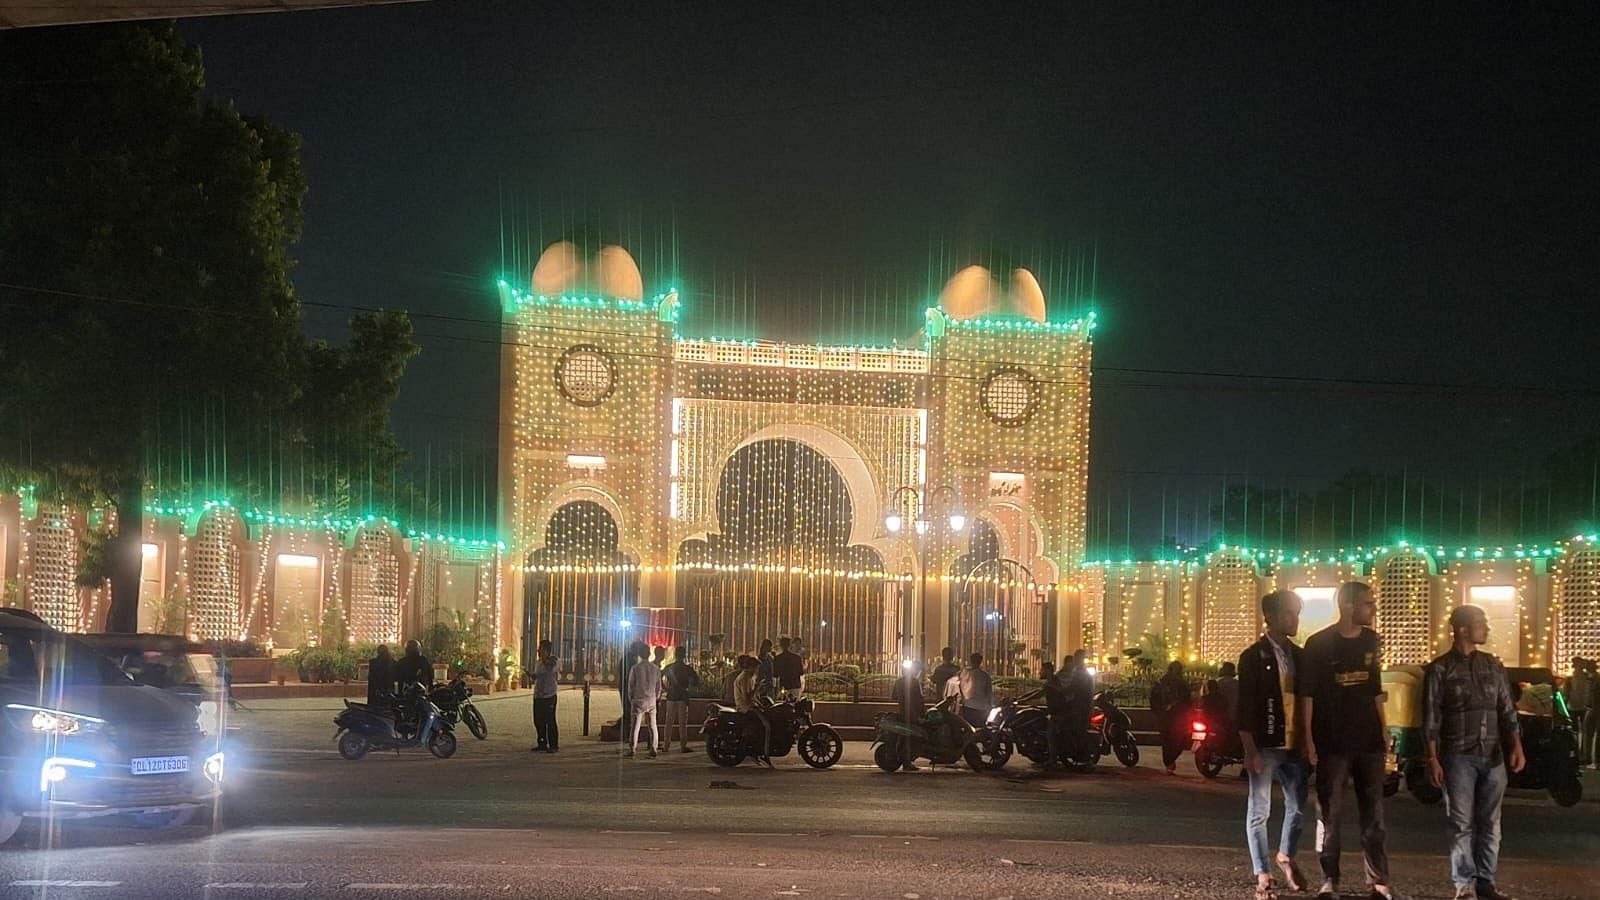 <div class="paragraphs"><p>Illuminated gates of the Jamia Millia Islamia university.</p></div>